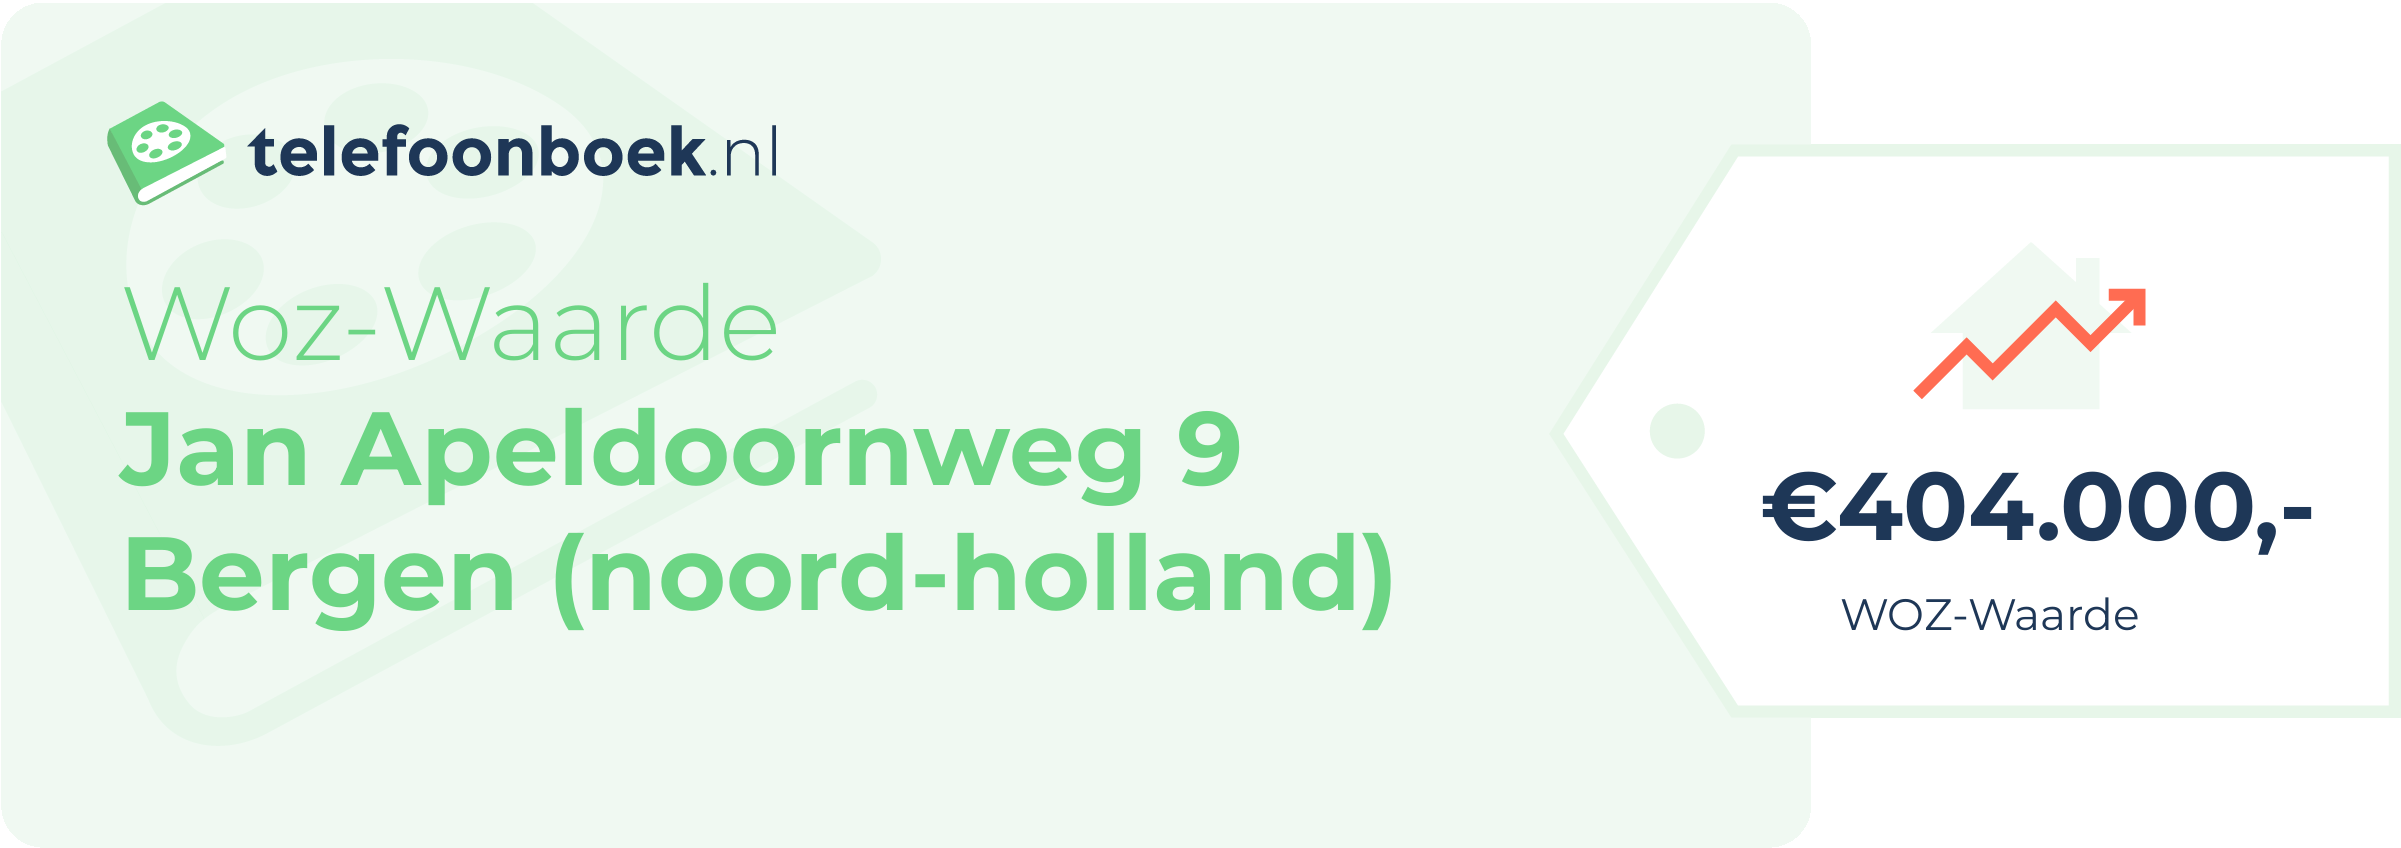 WOZ-waarde Jan Apeldoornweg 9 Bergen (Noord-Holland)